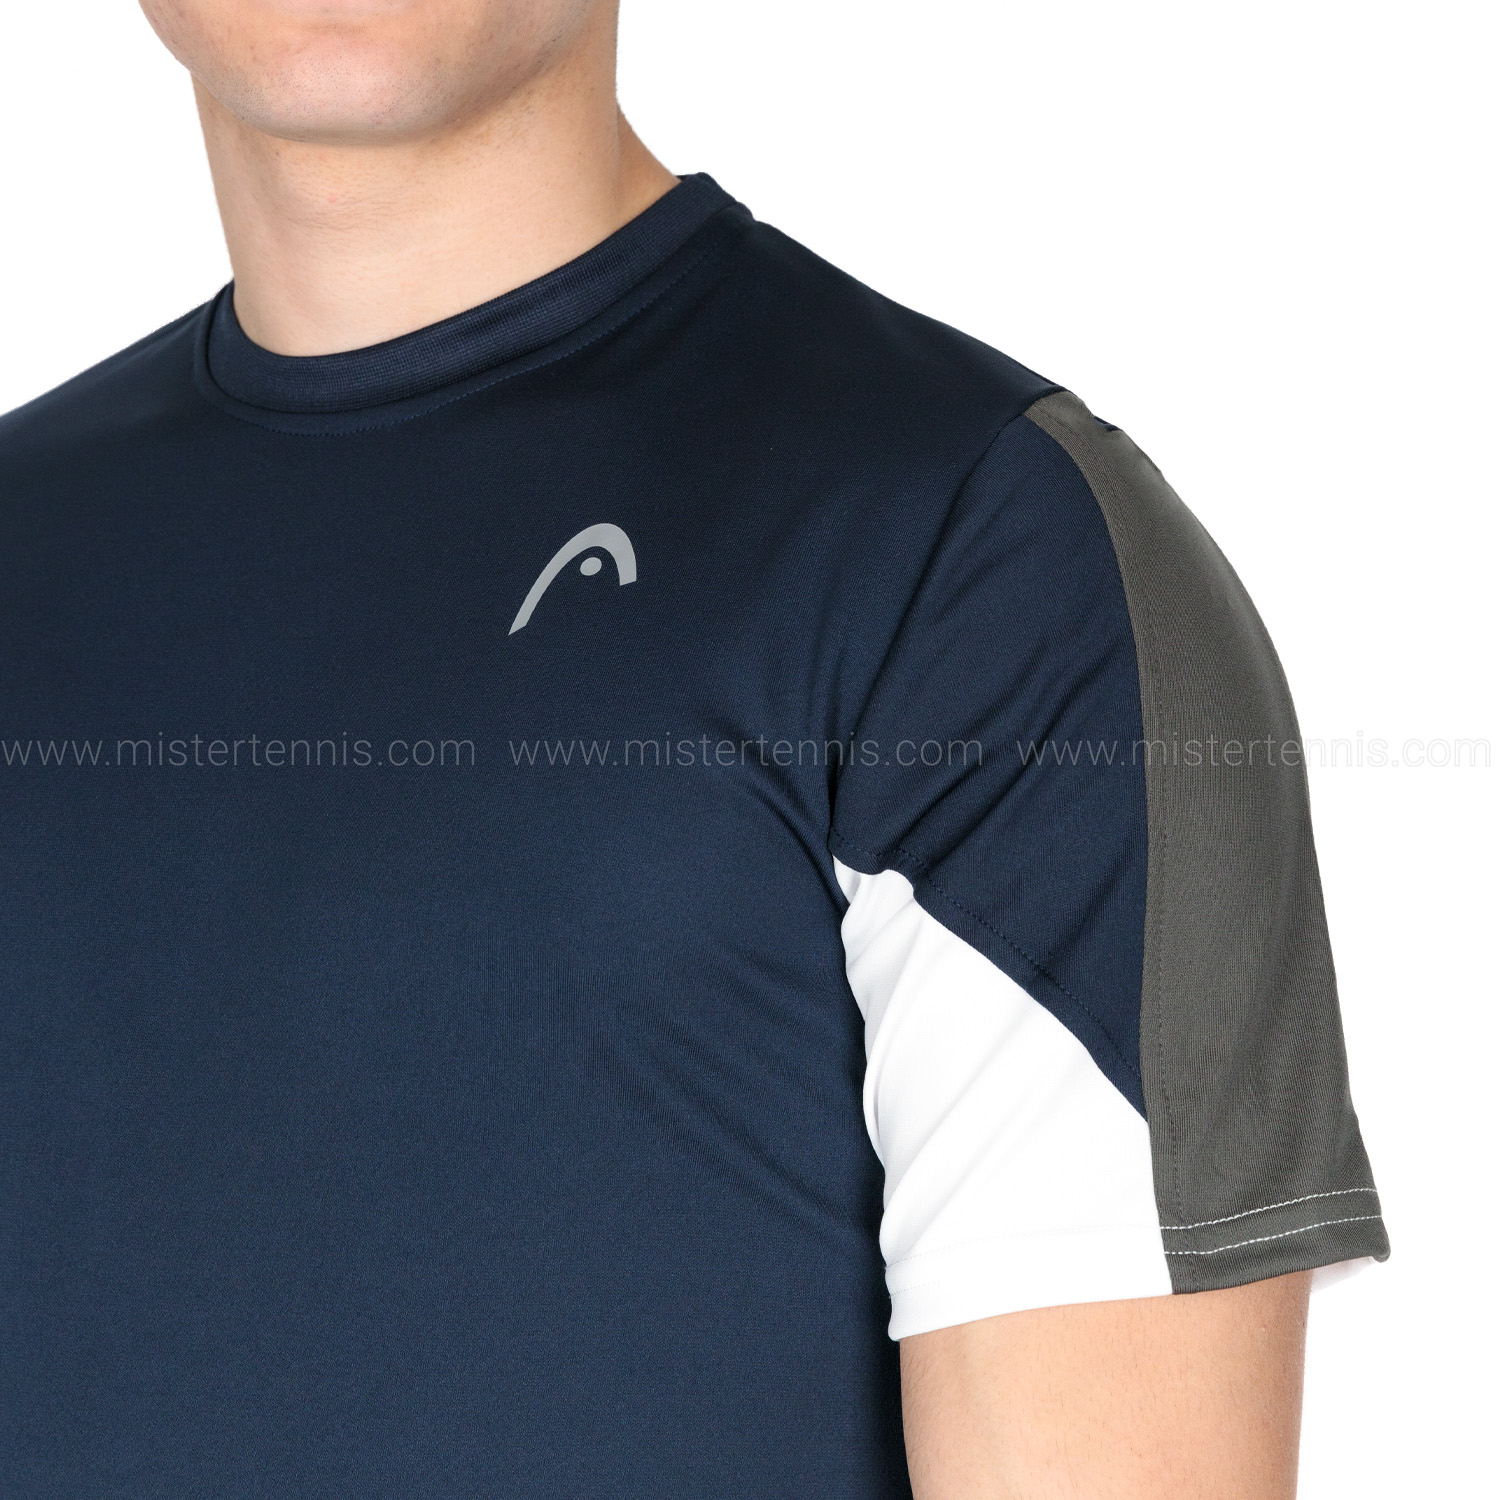 Head Club 22 Tech Camiseta - Dark Blue